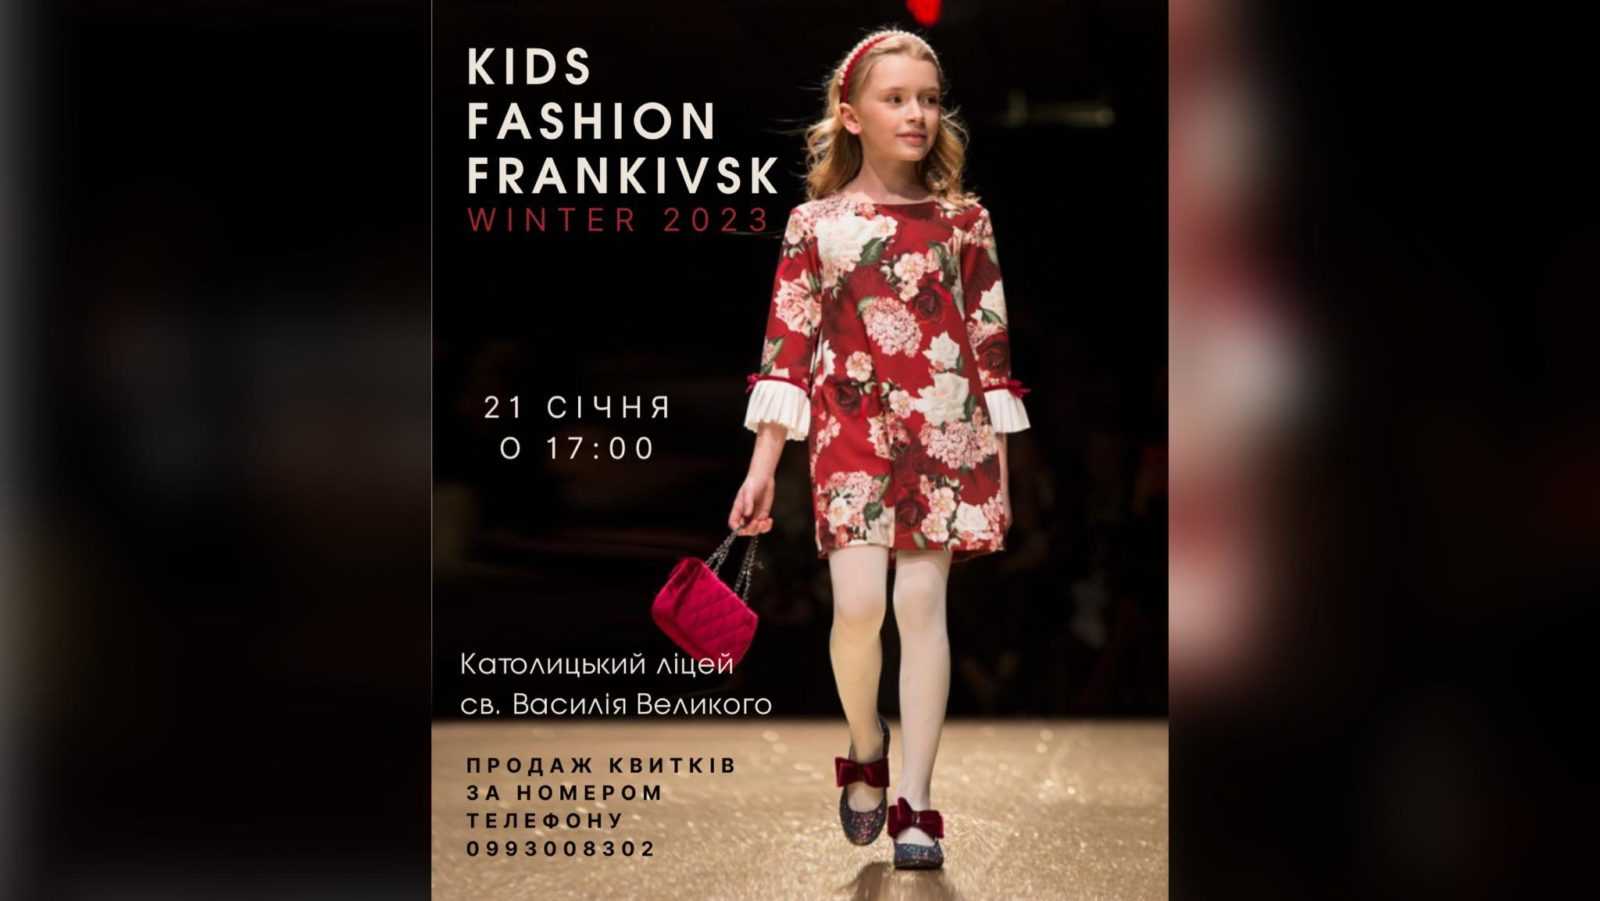 Kids Fashion Frankivsk winter 2023